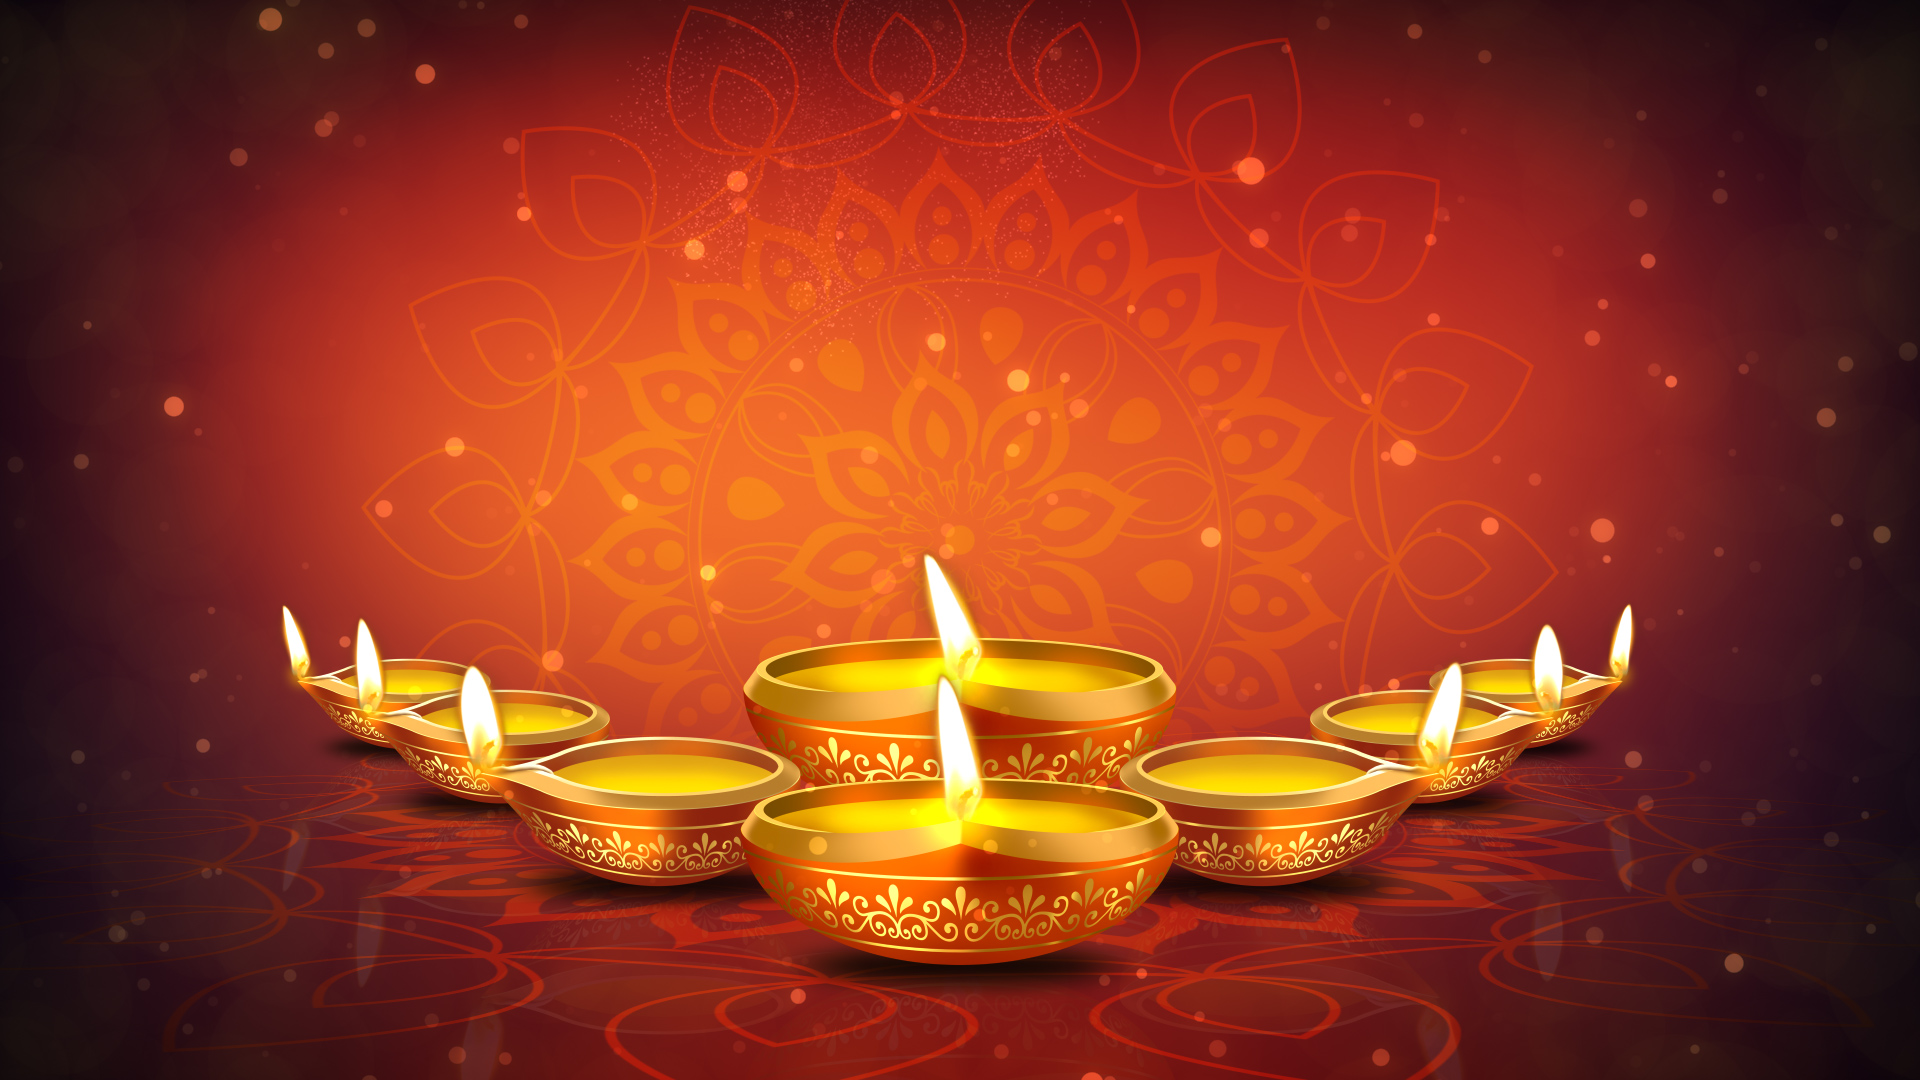 Diwali festival beautiful background image